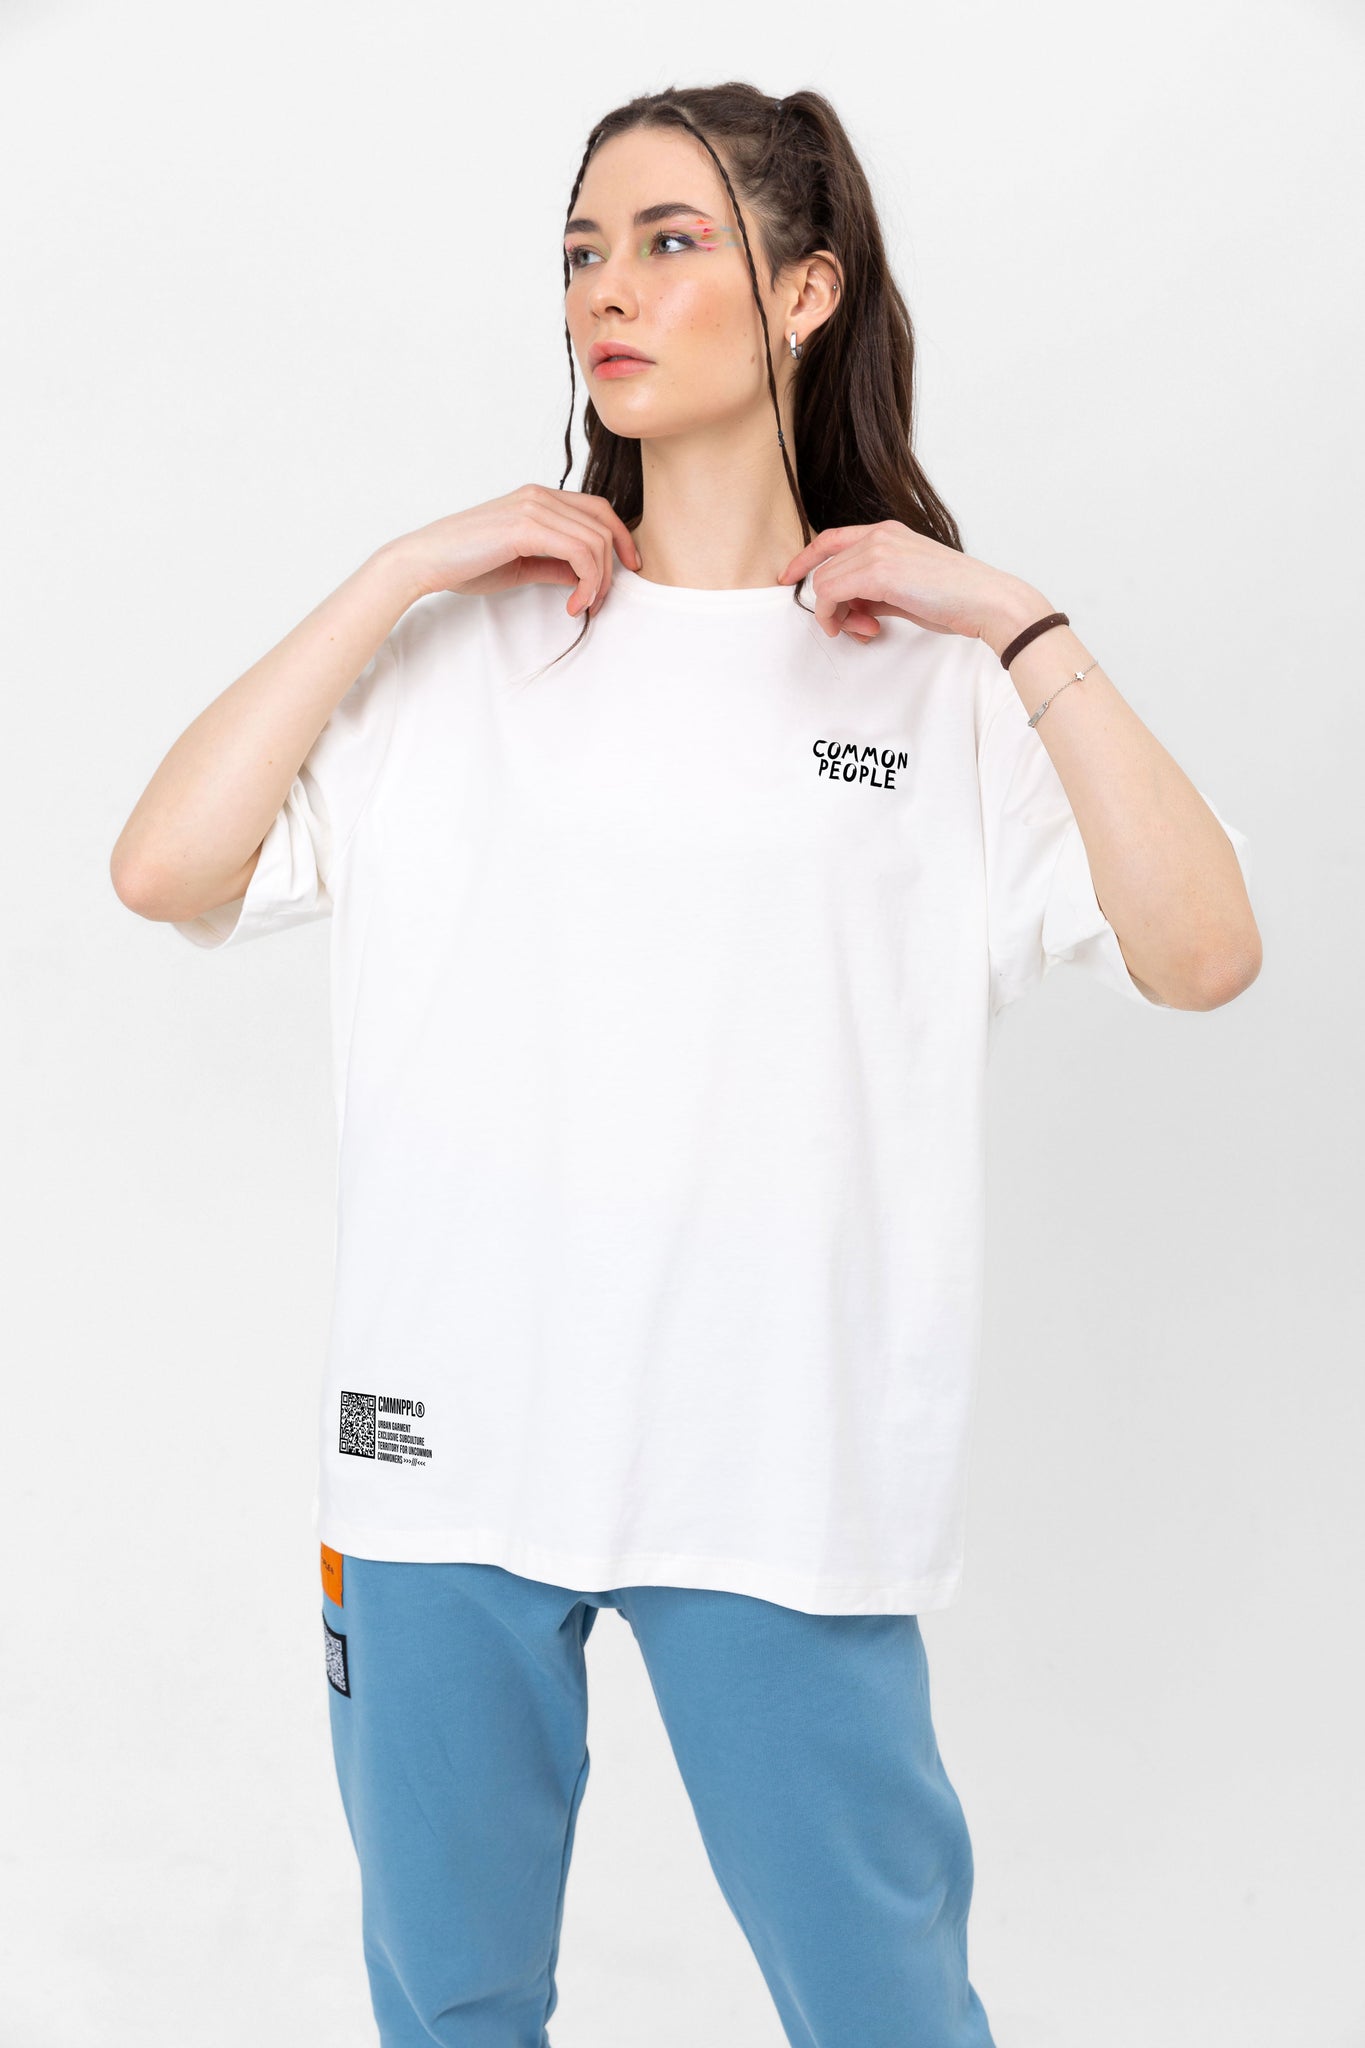 Afro - Off-White - Oversized T-shirt